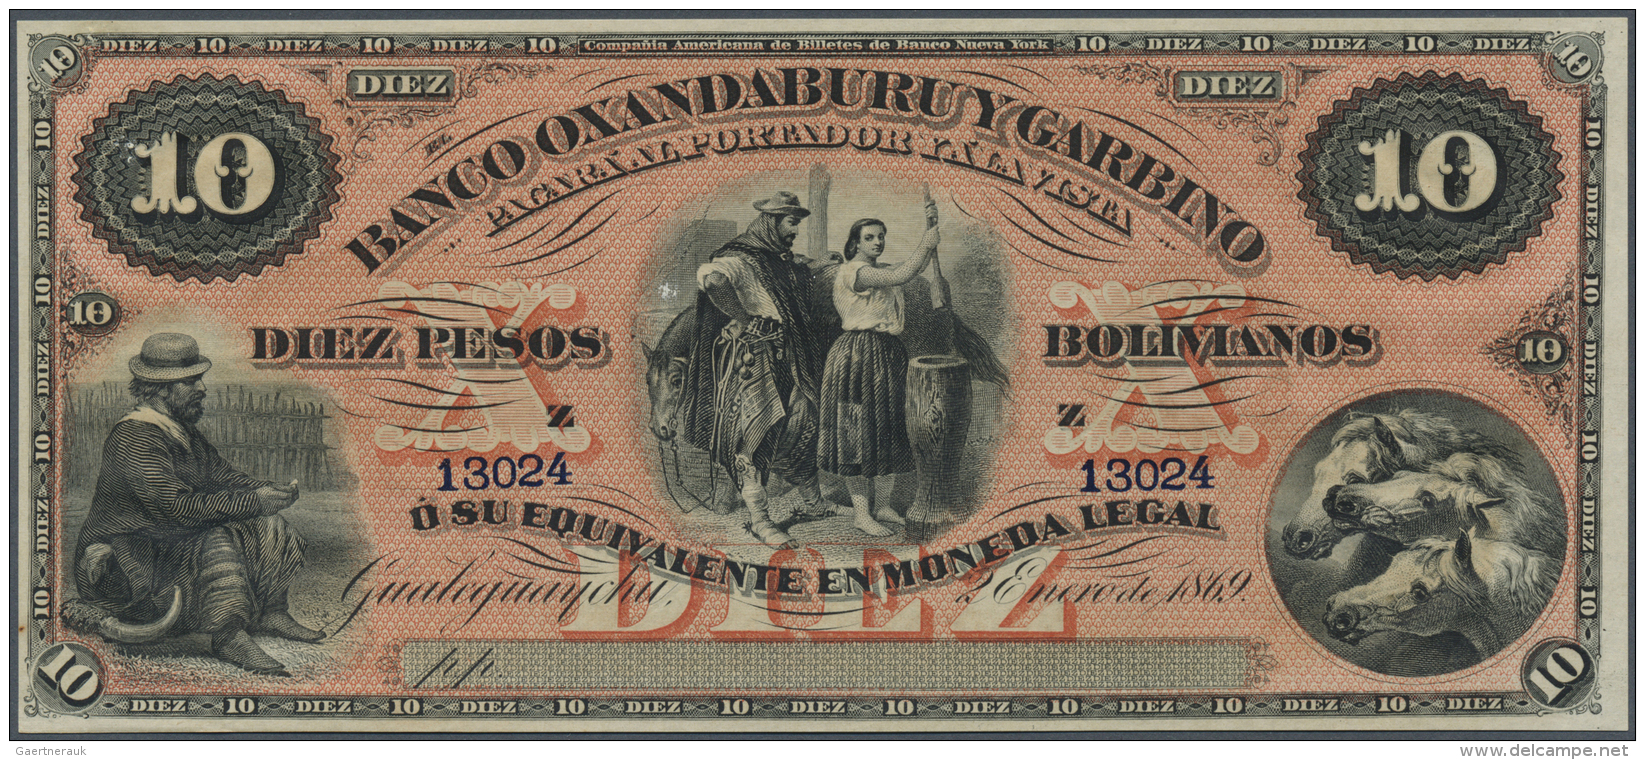 Argentina / Argentinien:  Banco Oxandaburu Y Garbino 10 Bolivianos 1869 Remainder Without Signature In Perfect Condition - Argentine